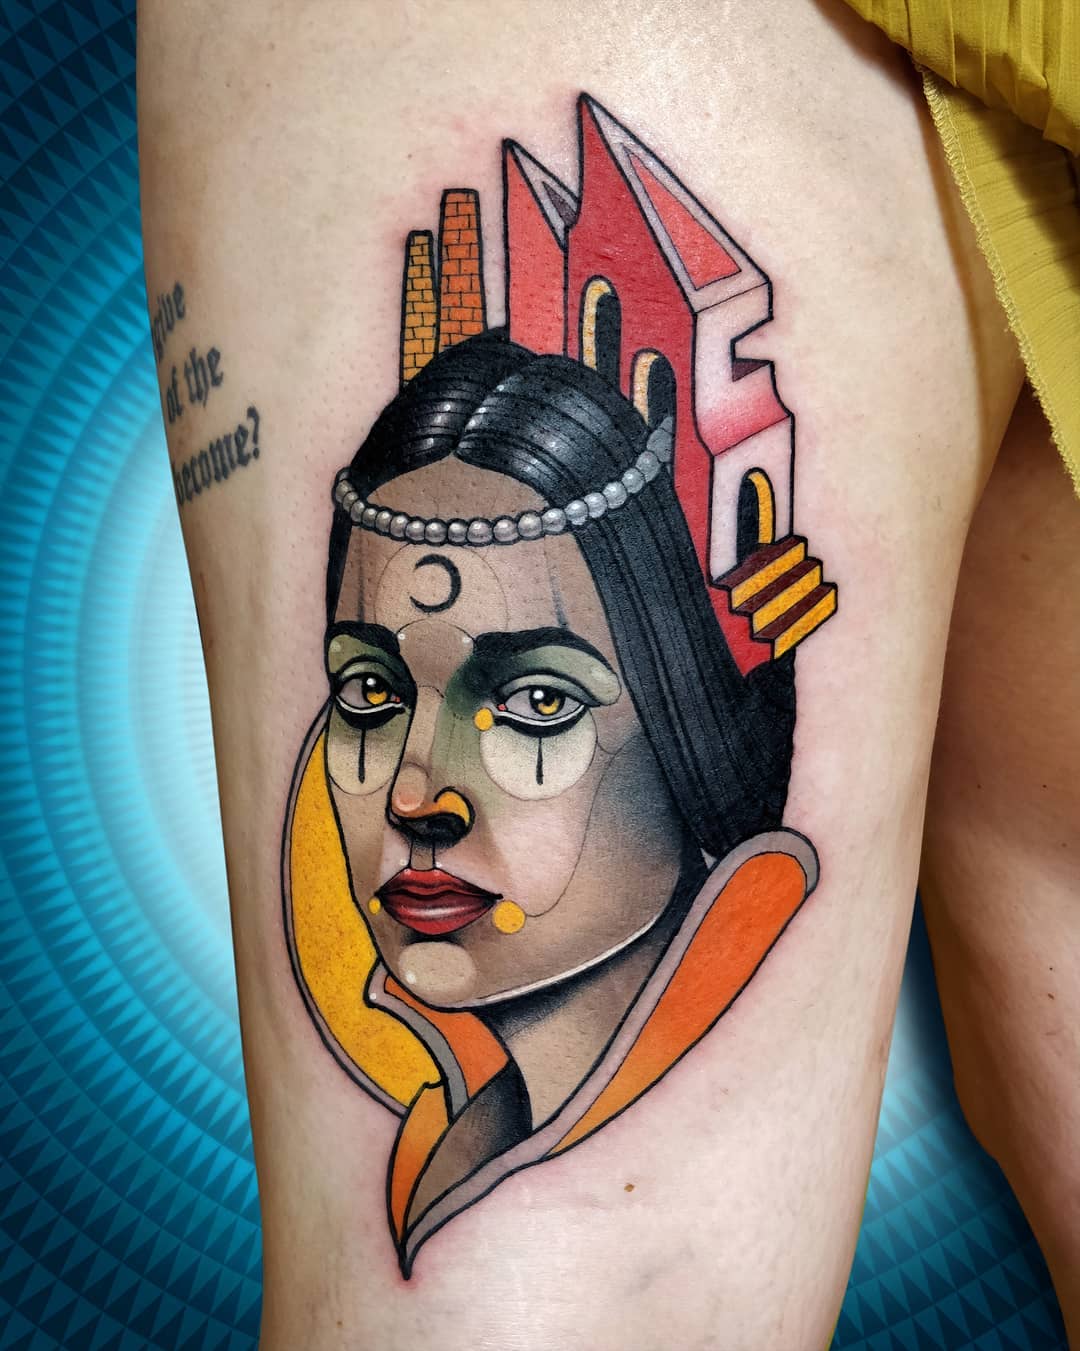 NICK Tribal Tattoo stock vector. Illustration of message - 8219769